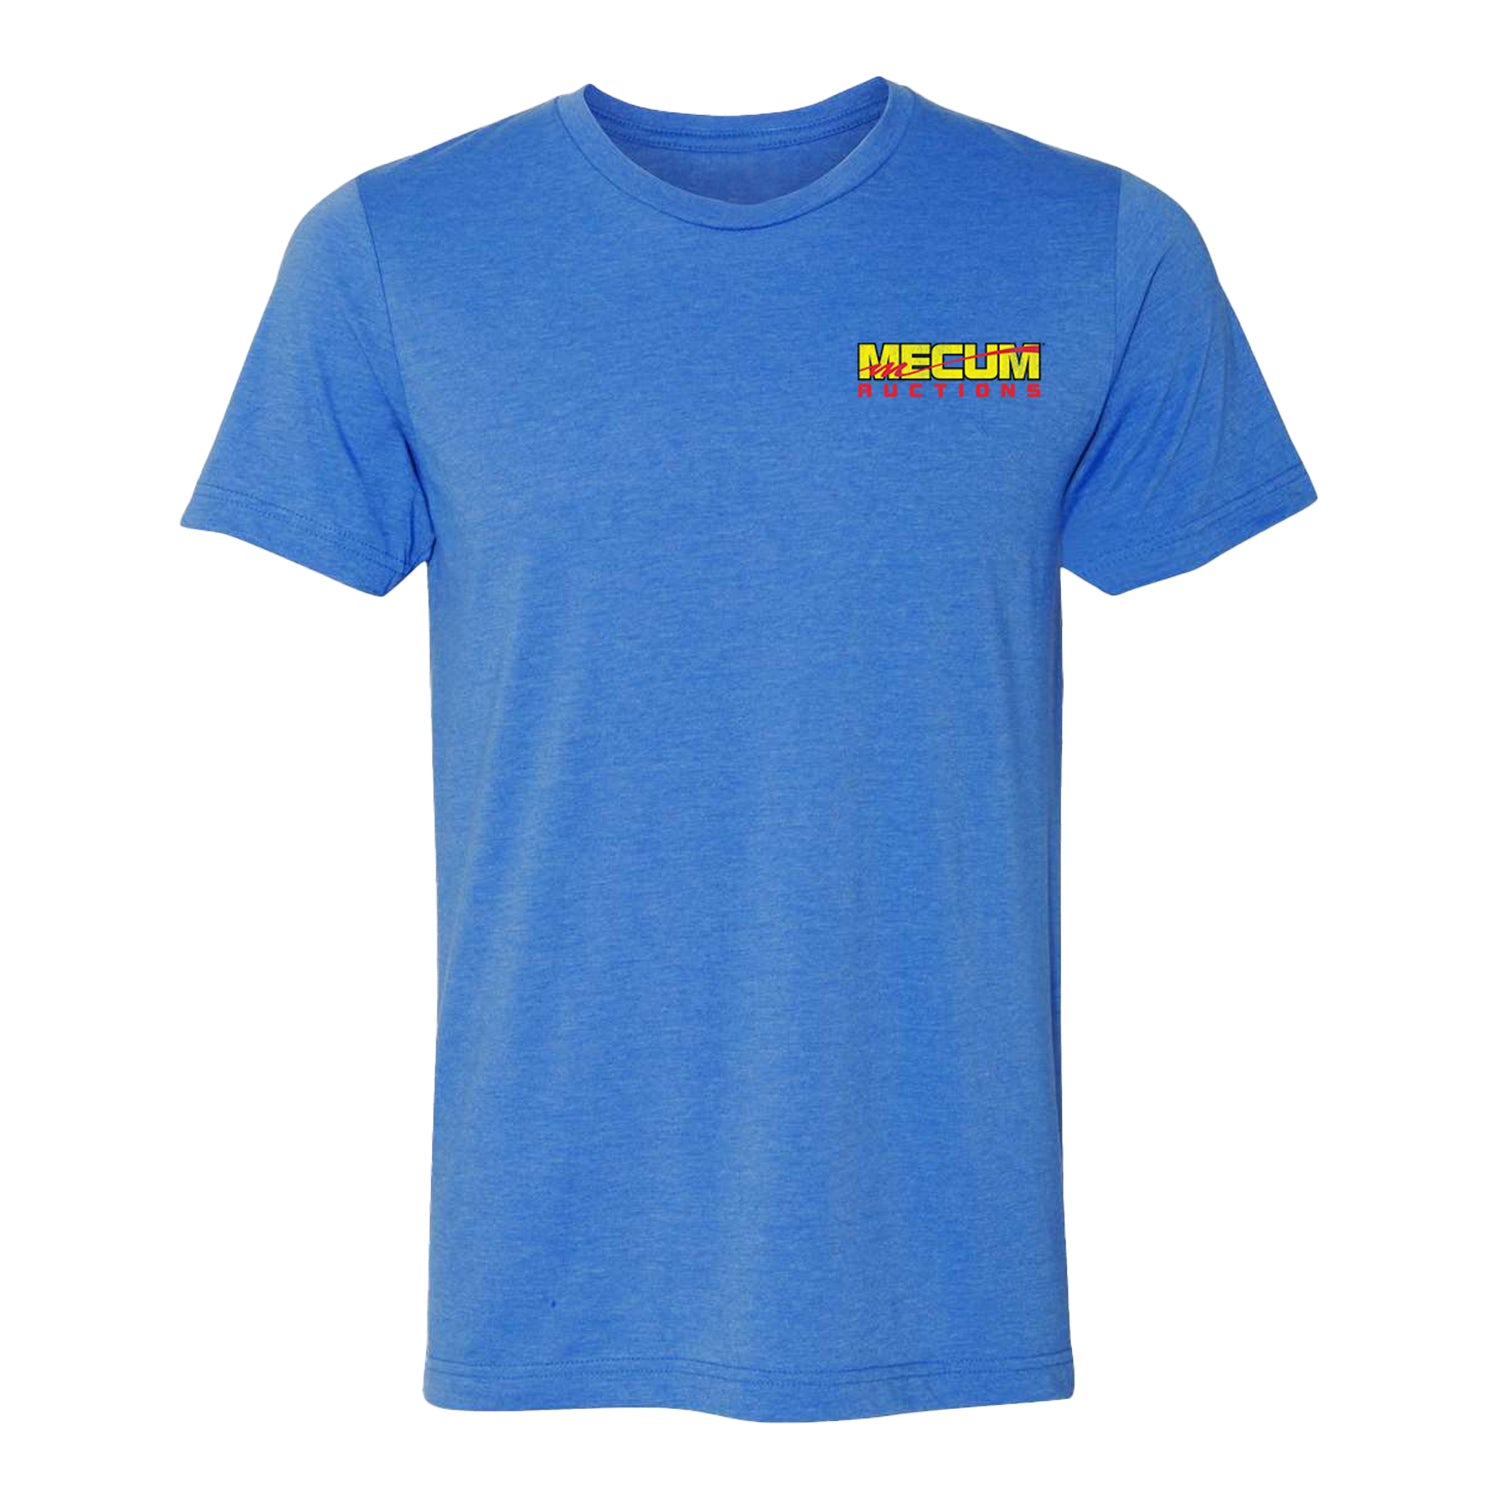 Mecum Auctions Heather Royal Car Design T-Shirt in Blue - Back View